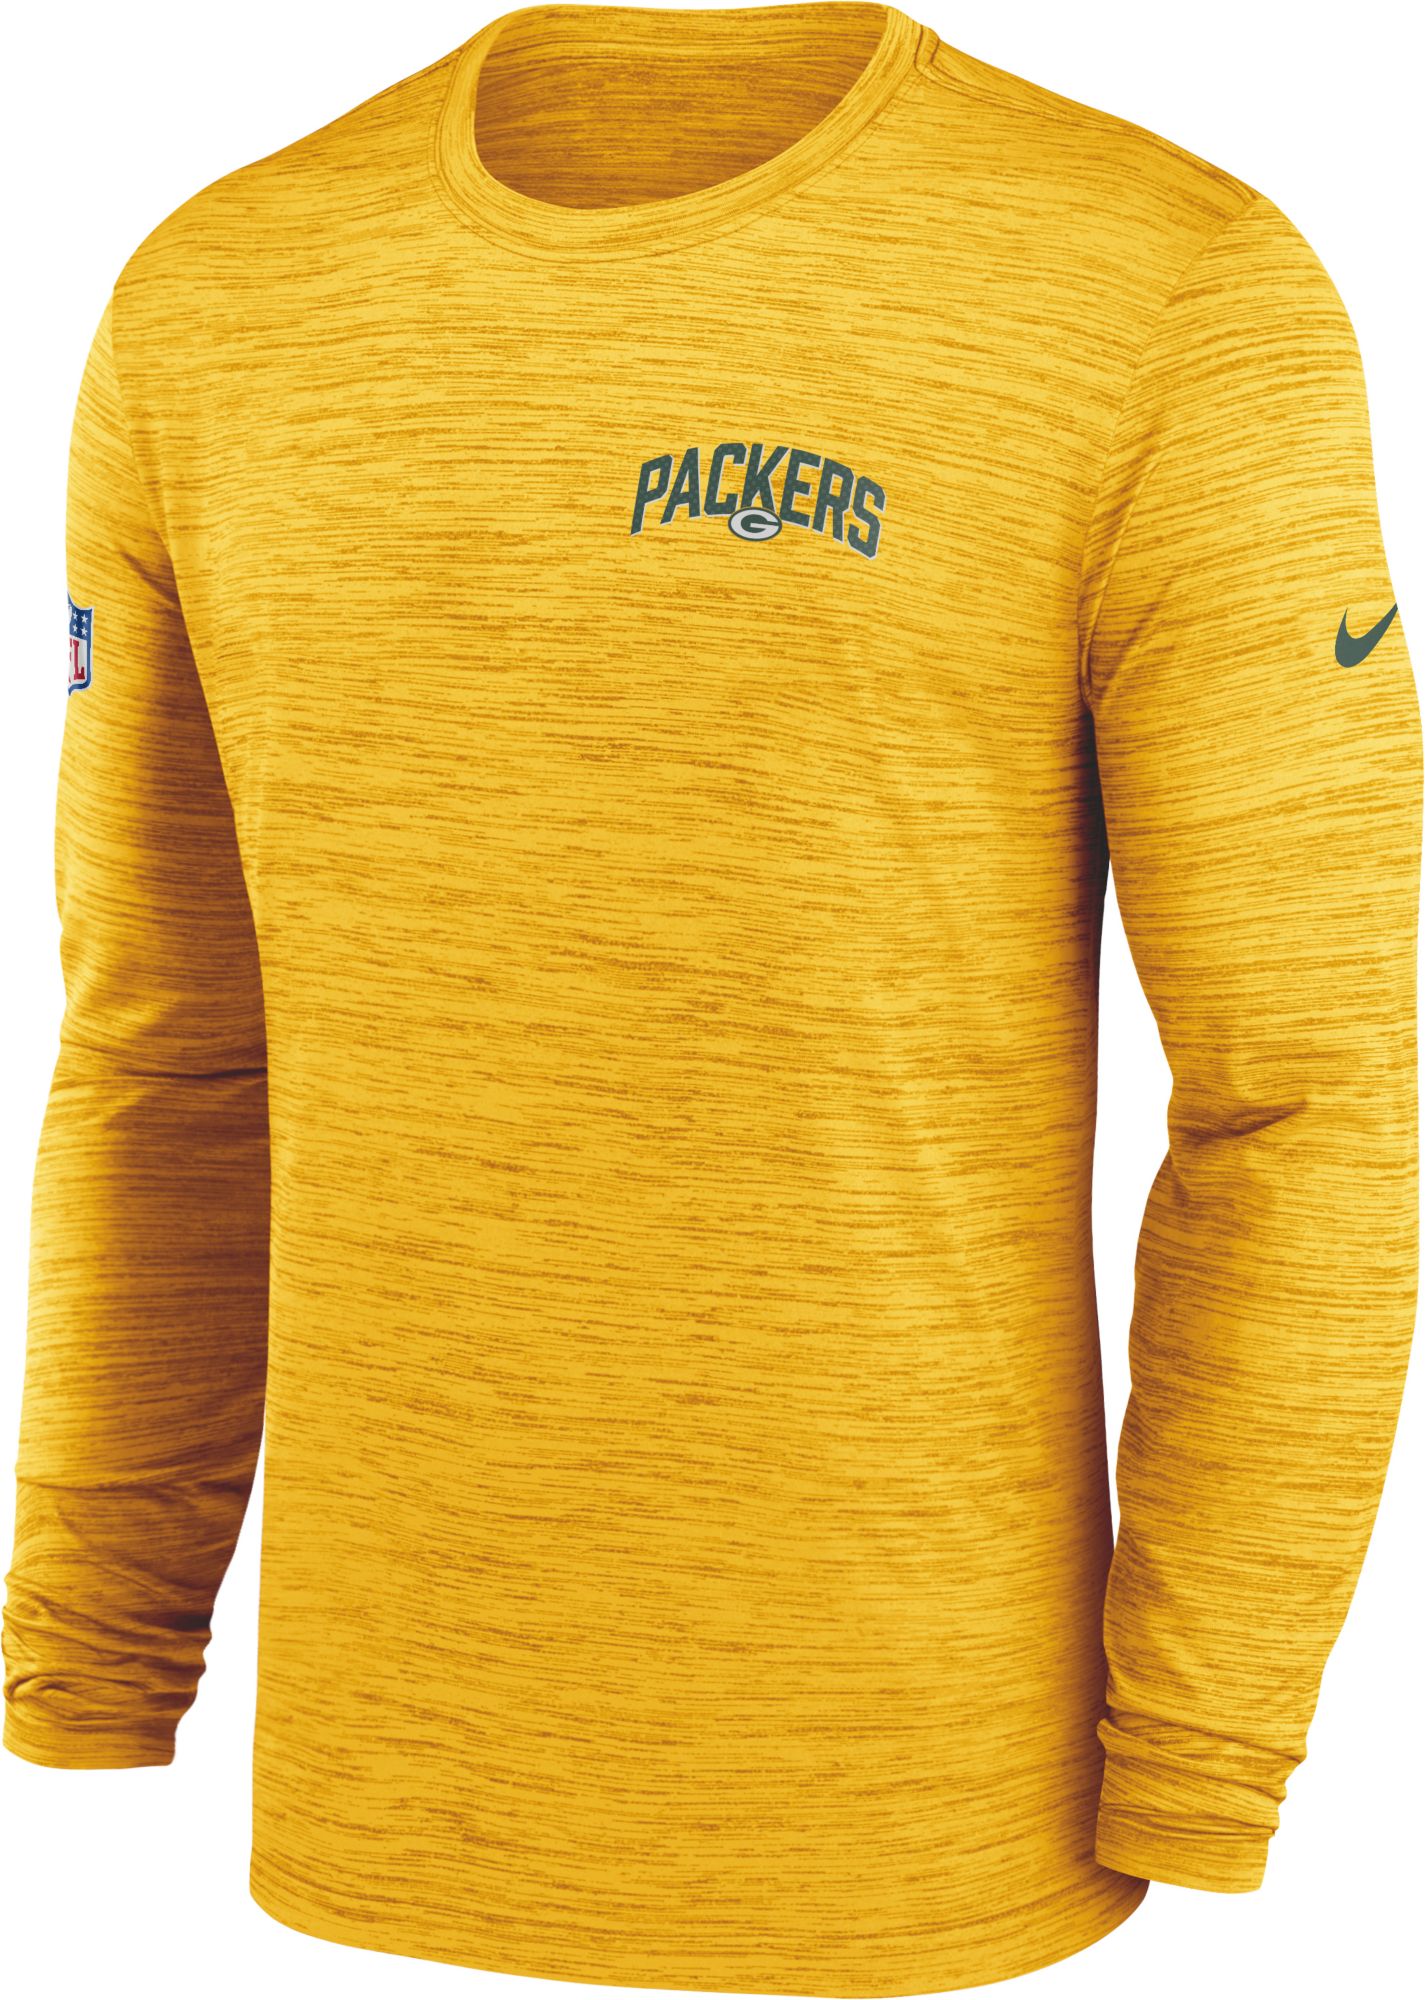 Nike / Men's Green Bay Packers Sideline Legend Velocity Gold